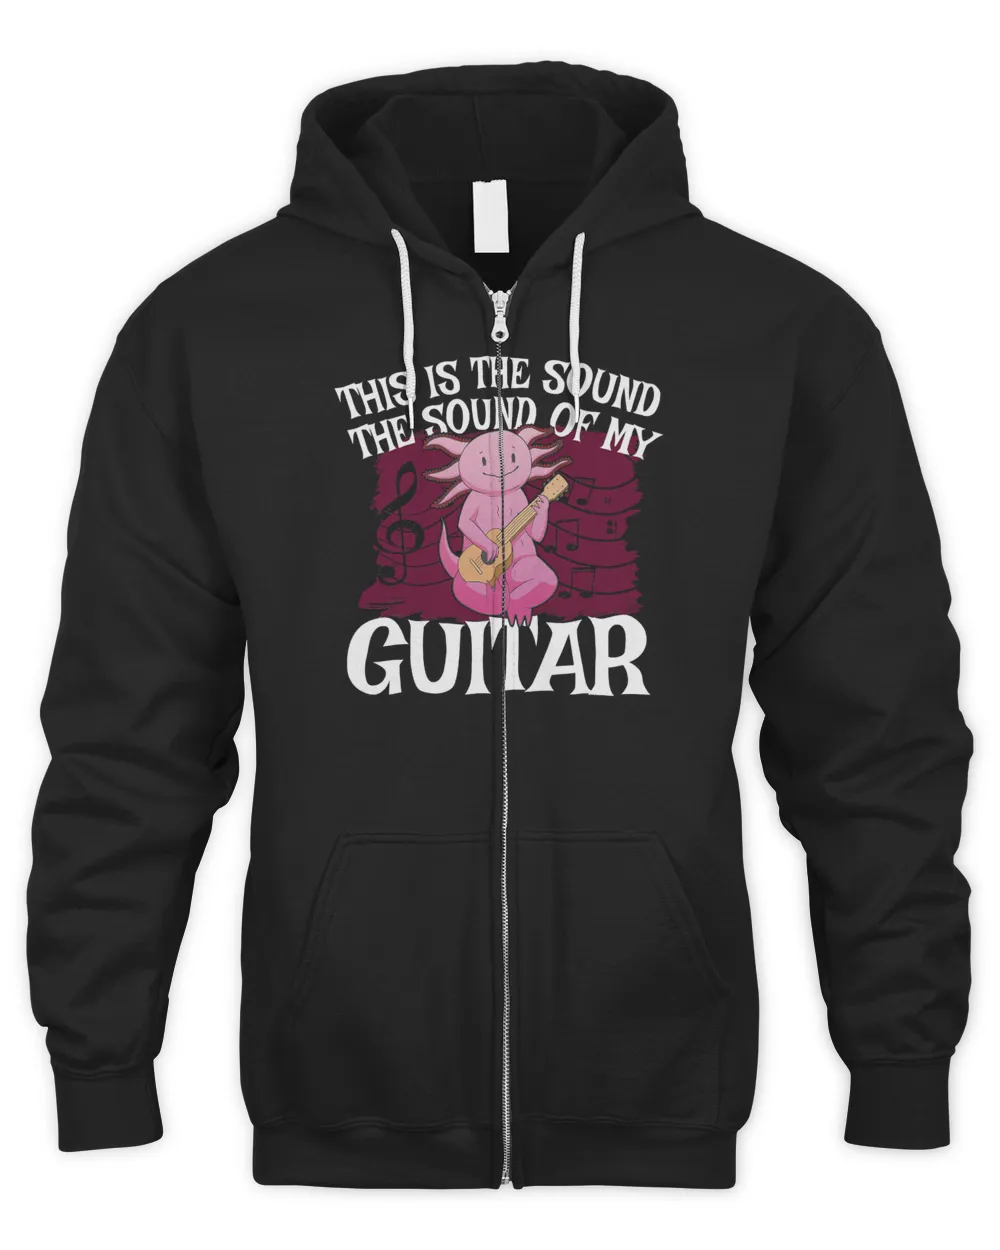 Axolotl Play Guitar with Notes and Melody 410